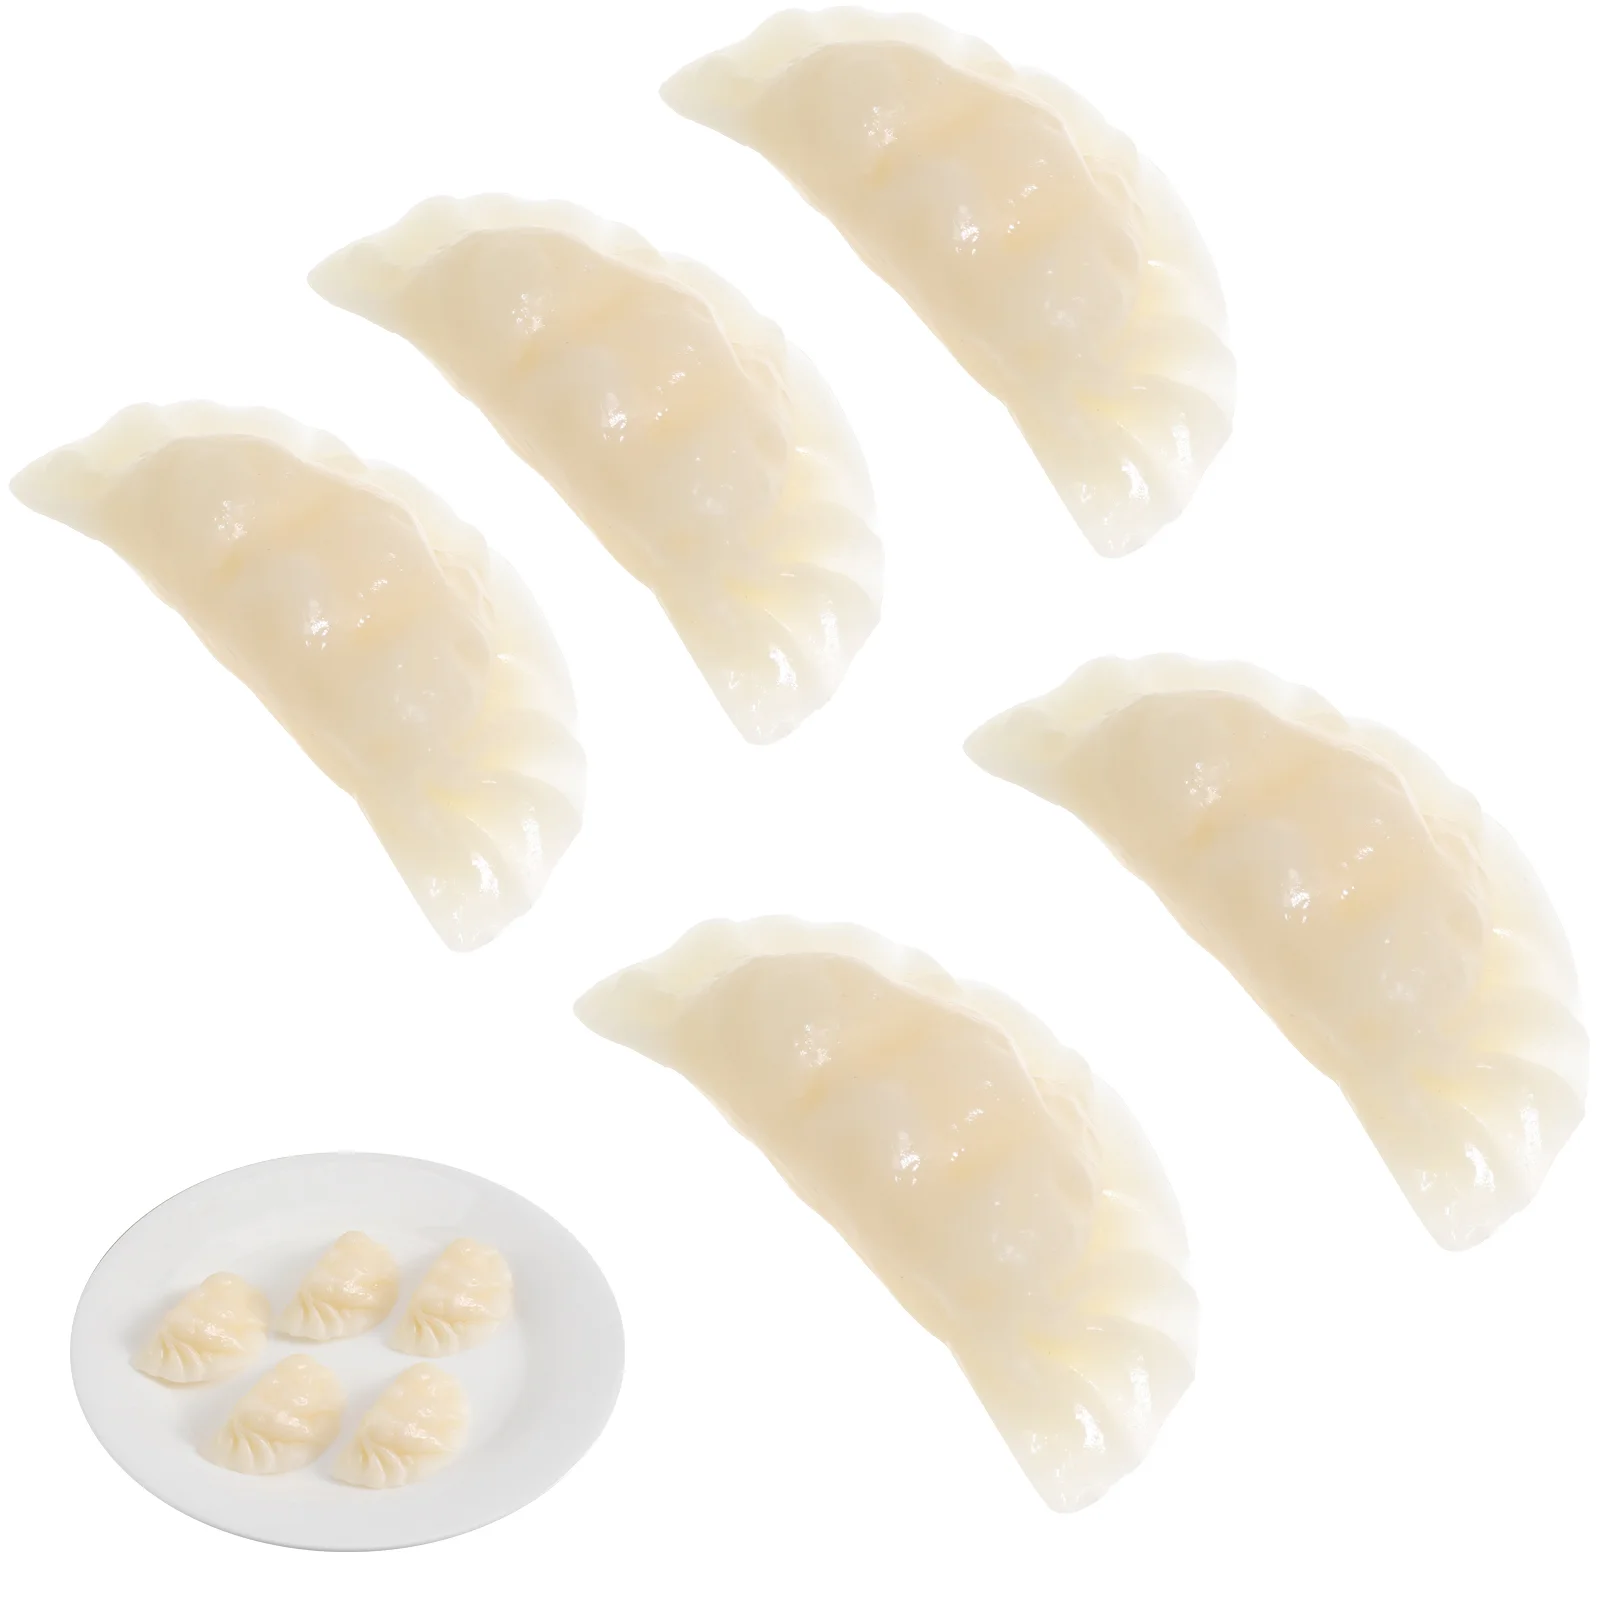 

5 Pcs Bread 6cm Imitation Dumplings Child Stress Ball Food Display Pvc Simulated Decor